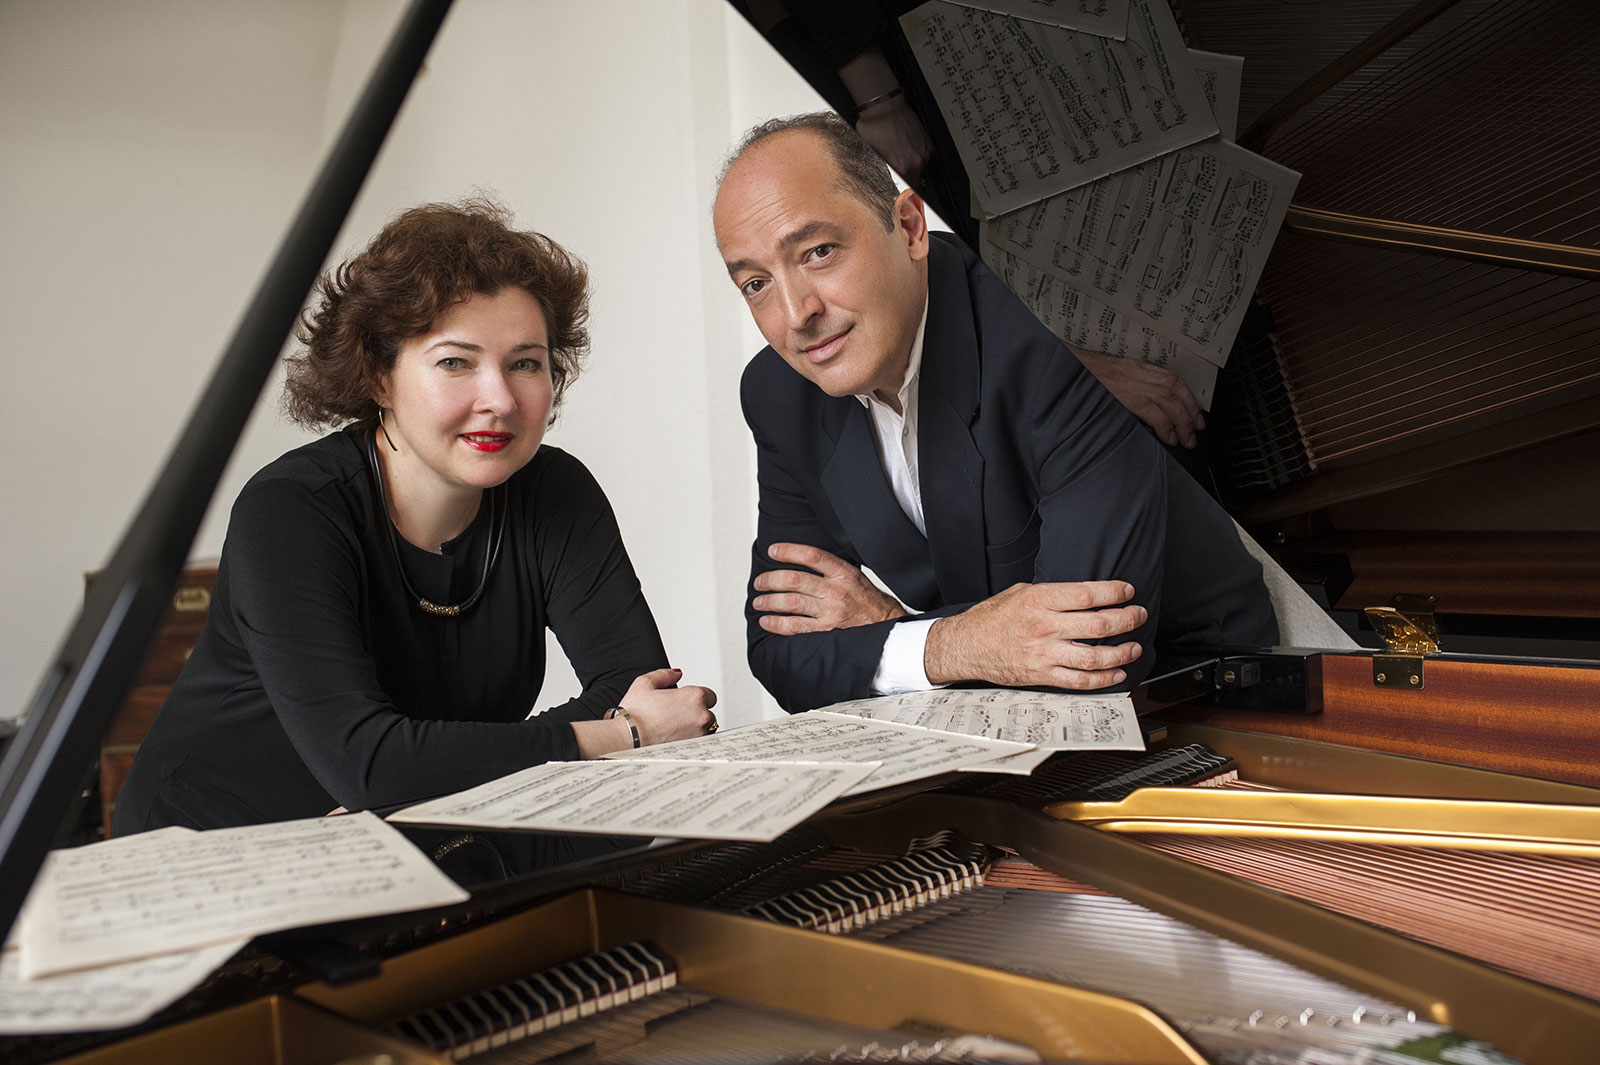 Klavierschule Zürich, Klavierunterricht Zürich - Ivan Minekov & Tatjana Samoylova